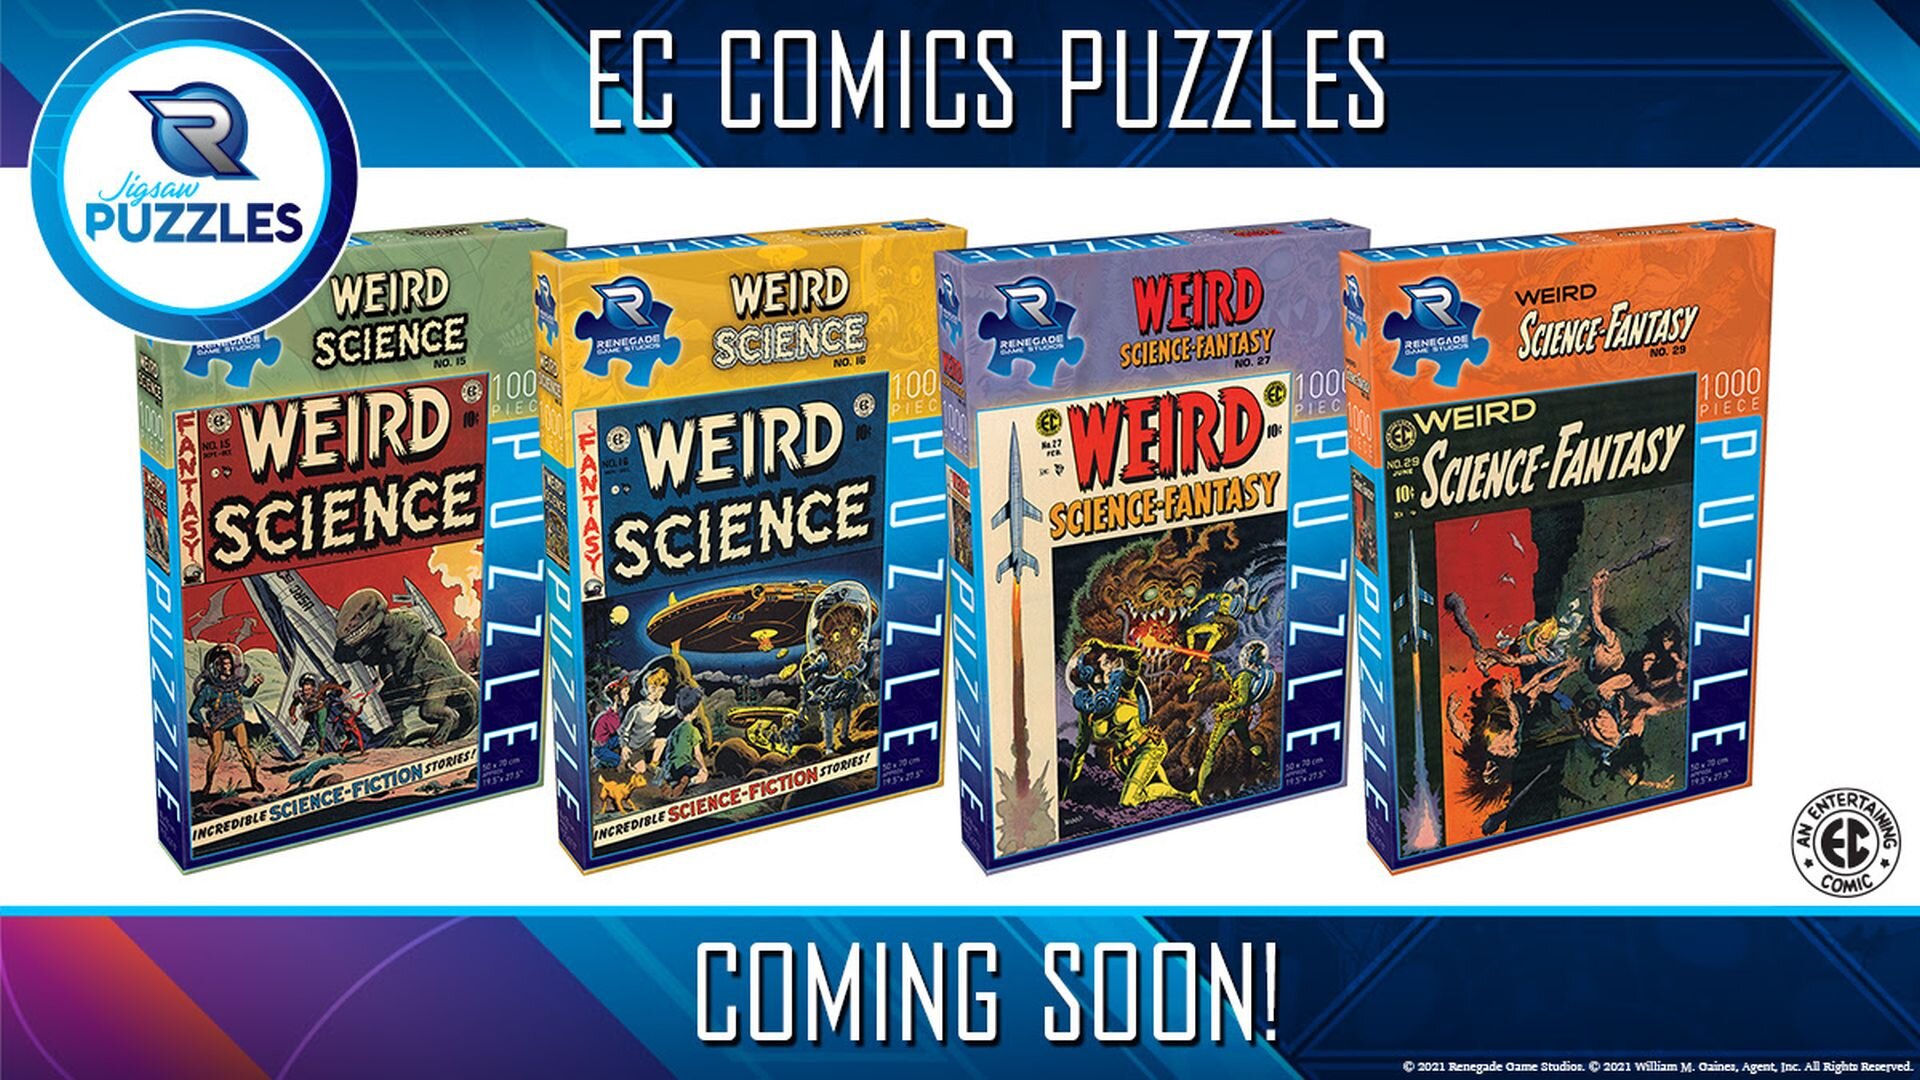 15 1000 Pieces Renegade Game Studios Jigsaw Puzzle EC Comics Weird Science No 